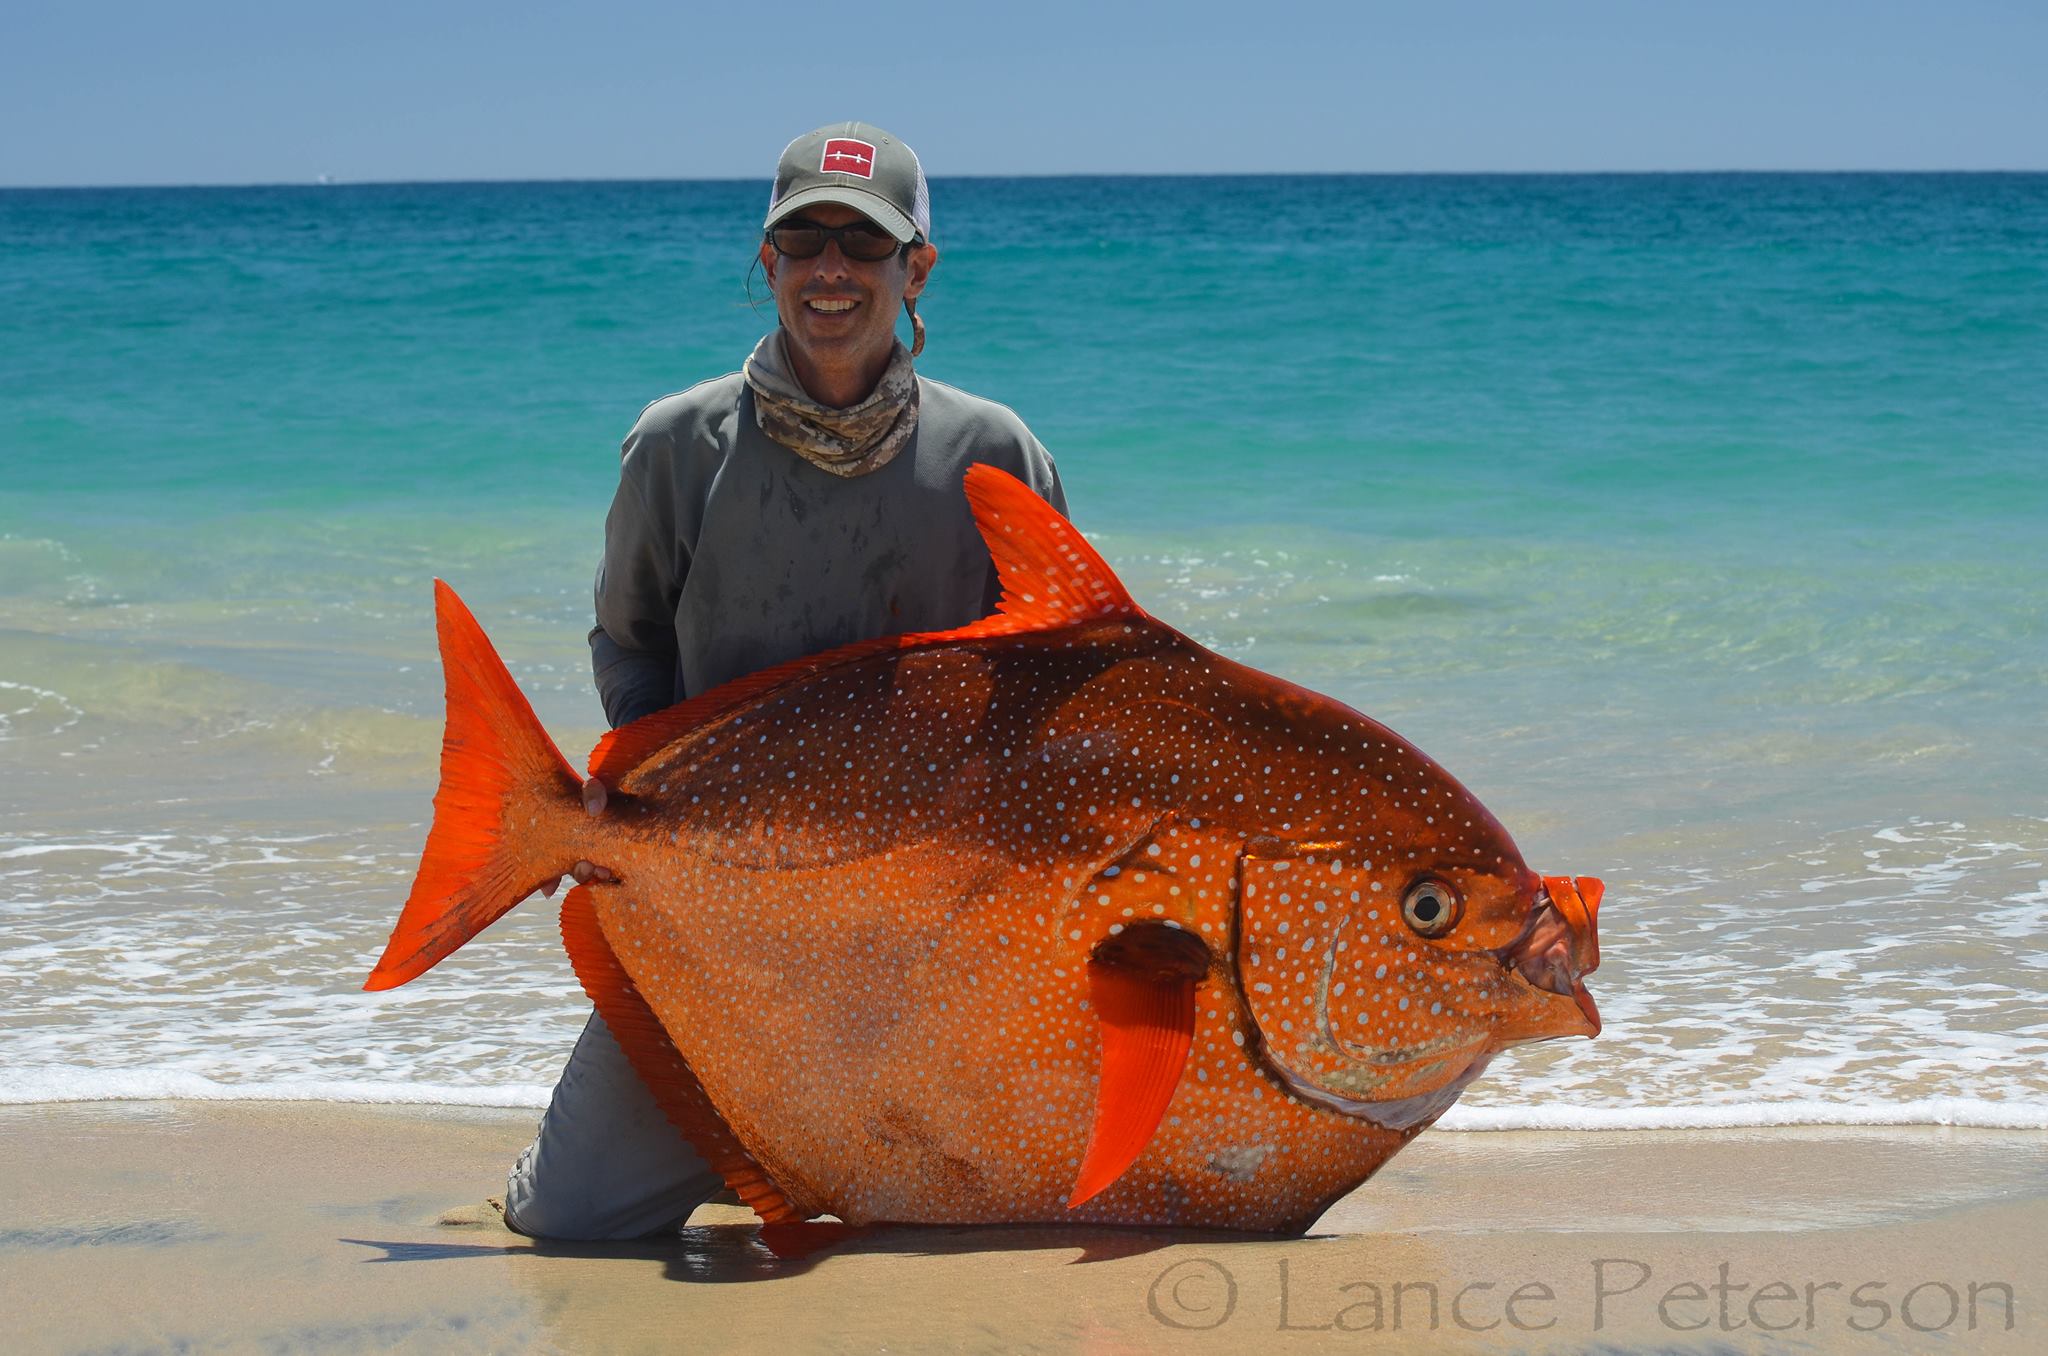 Baja California fishing guide lands rare opah, or moonfish – but ...